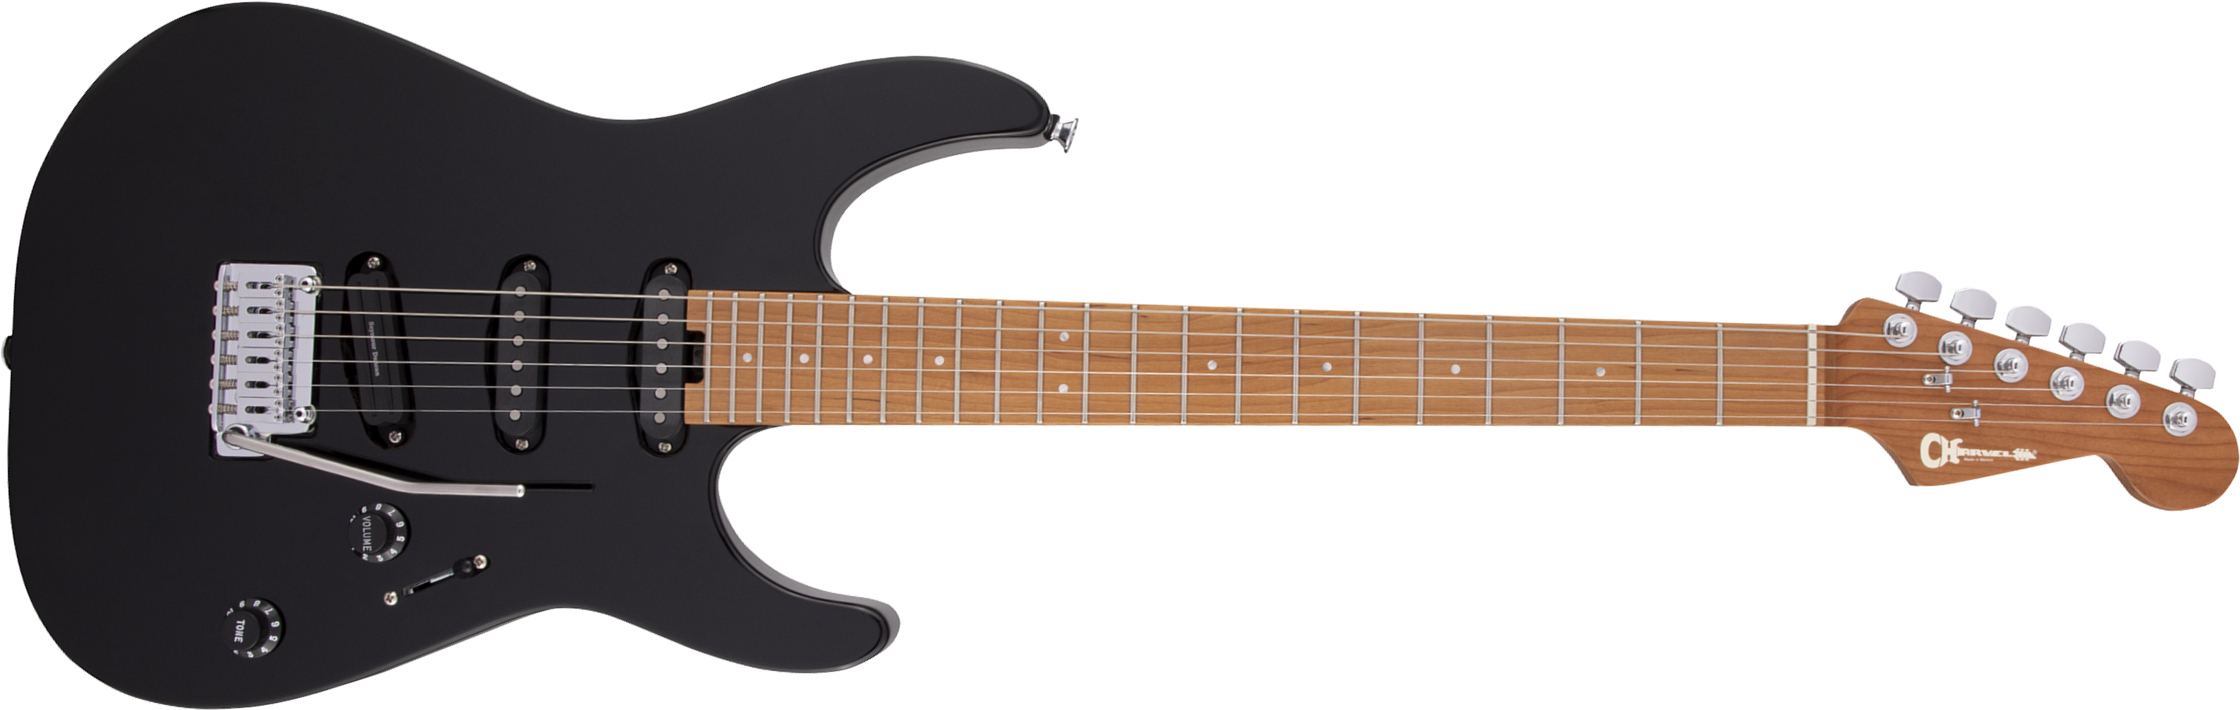 Charvel Dinky Dk22 Sss 2pt Cm Pro-mod 3s Seymour Duncan Trem Mn - Gloss Black - Str shape electric guitar - Main picture